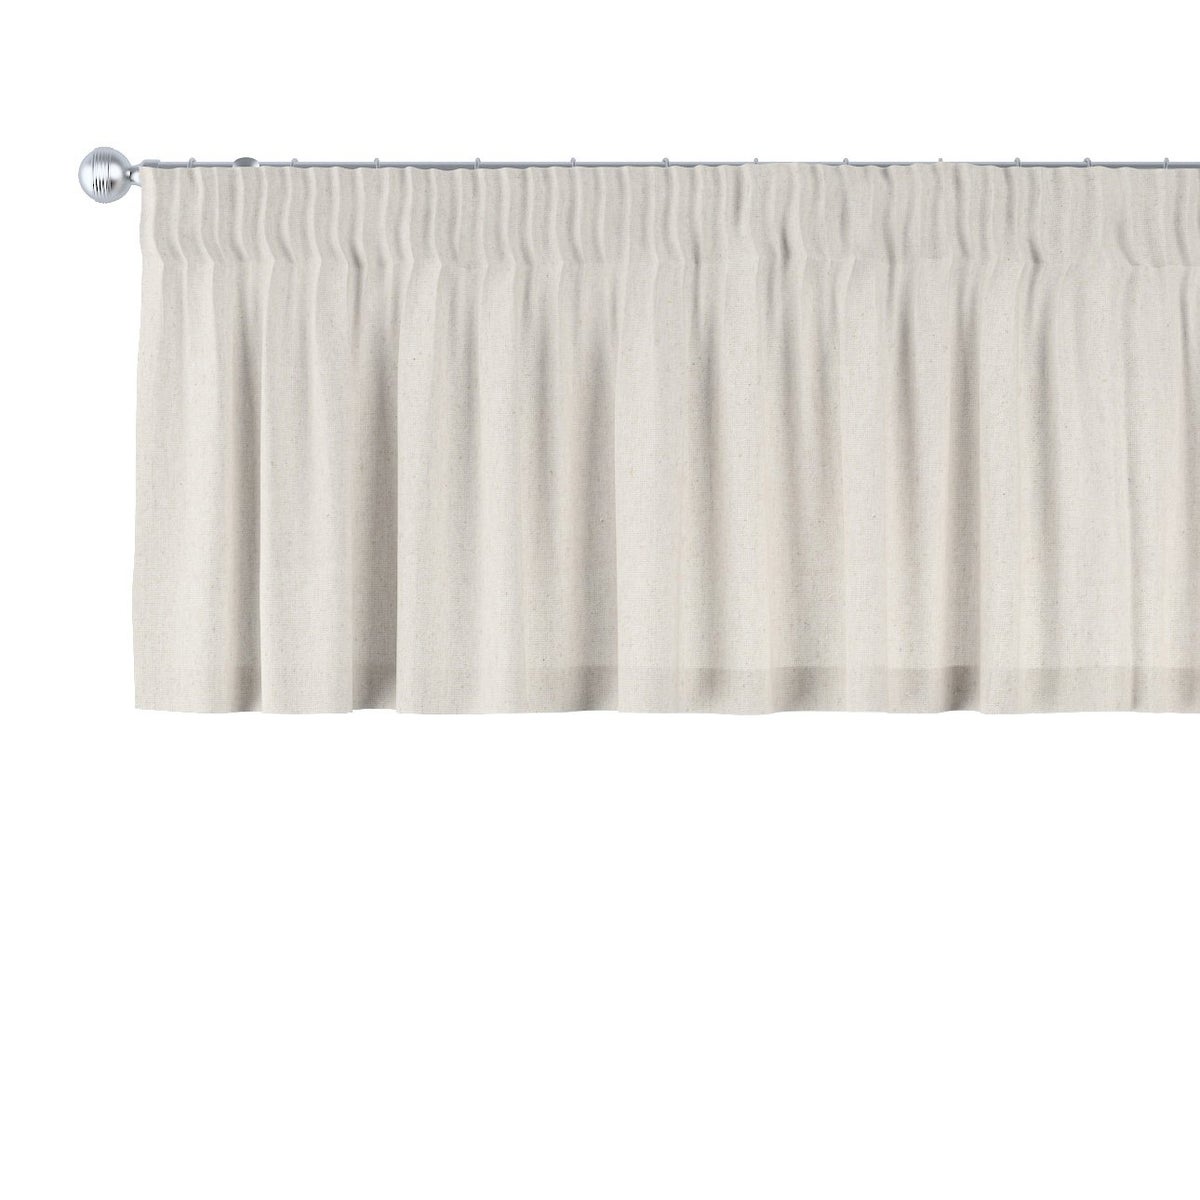 KURZGARDINE Loneta mit Kräuselband, grau und beige, 130x40 cm